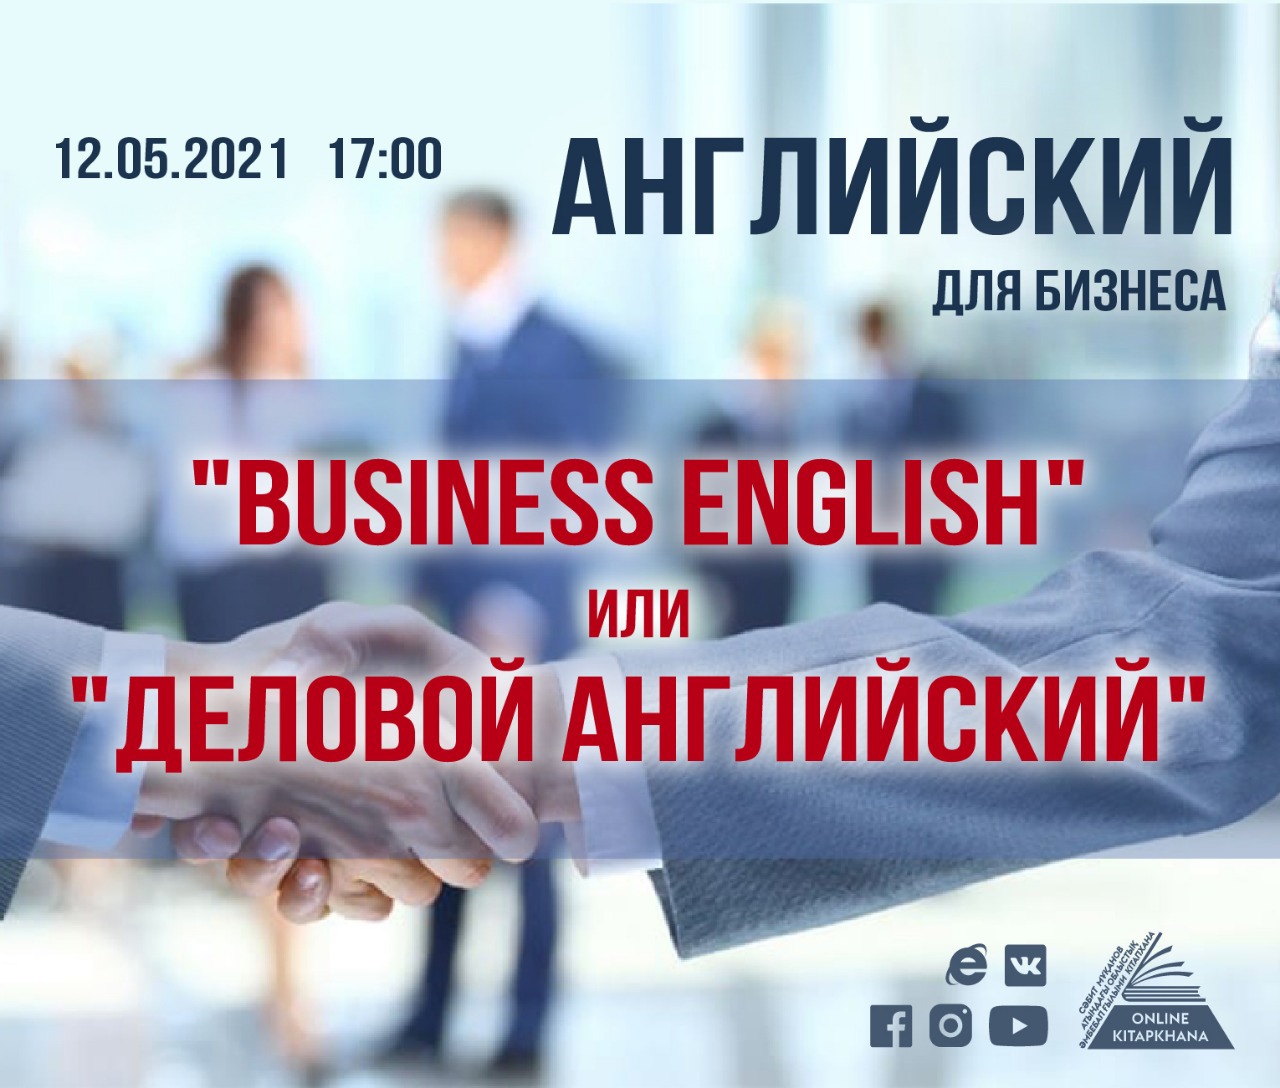 Про бизнес на английском. Бизнес английский. Деловой английский. Англичане и бизнес. Бизнес на англ.